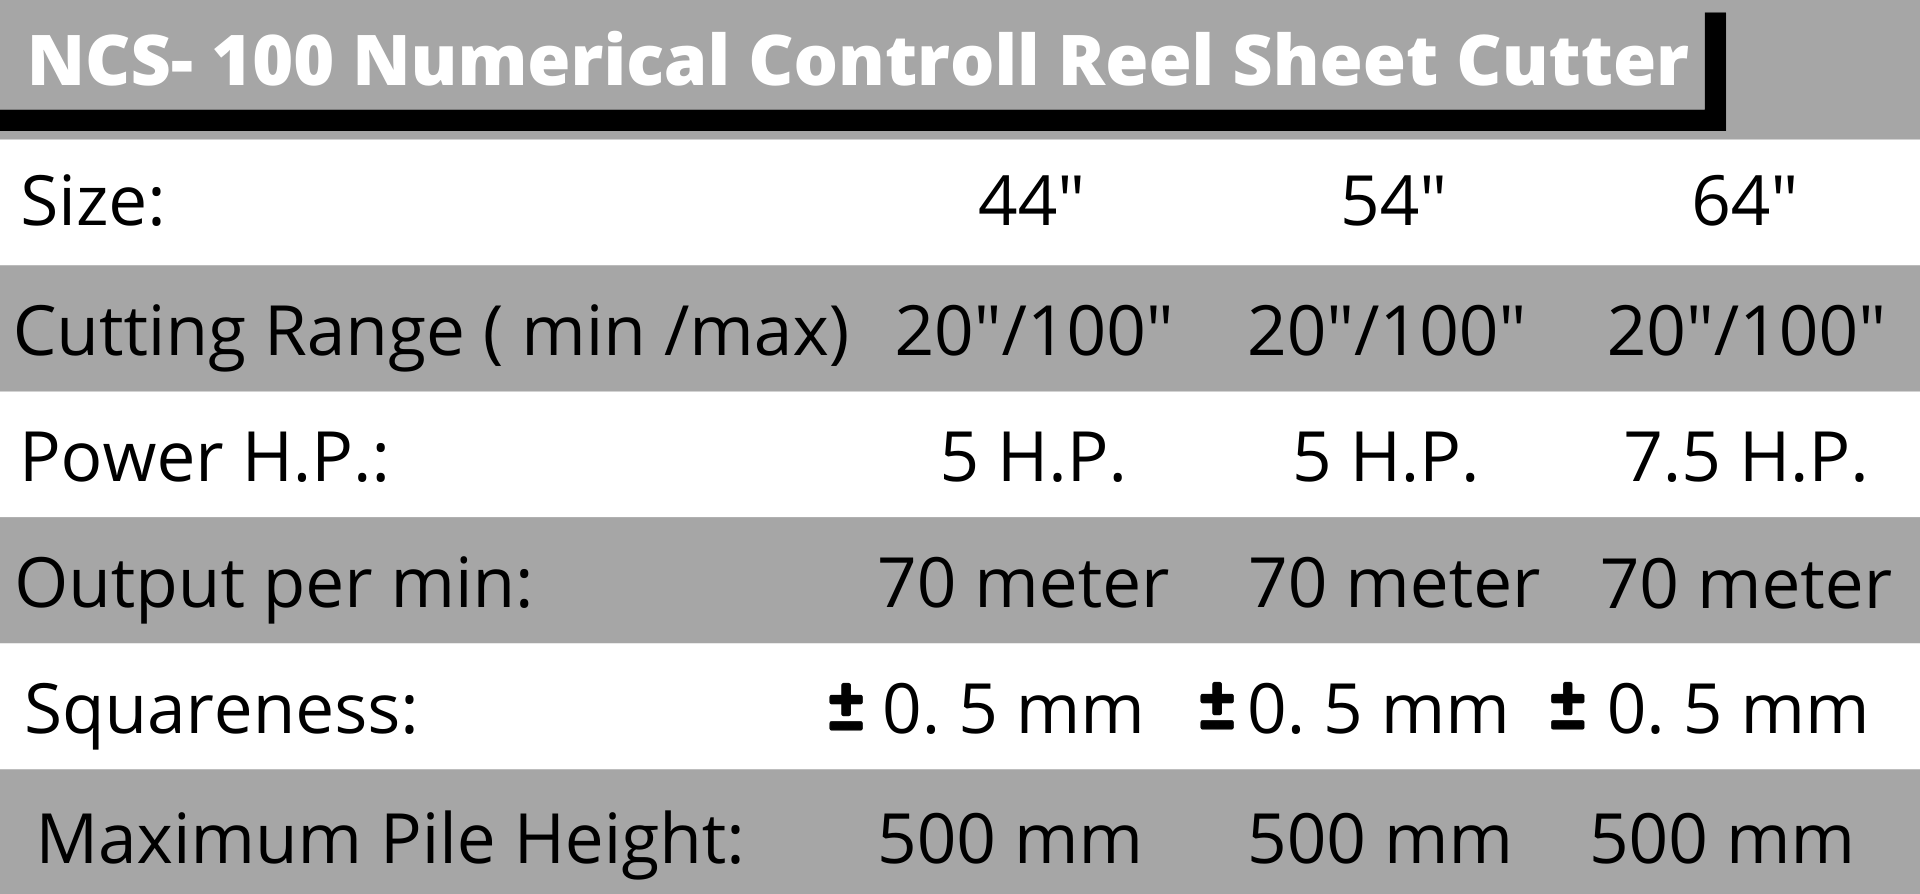 NCS- 100 Numerical Controll Reel Sheet Cutter